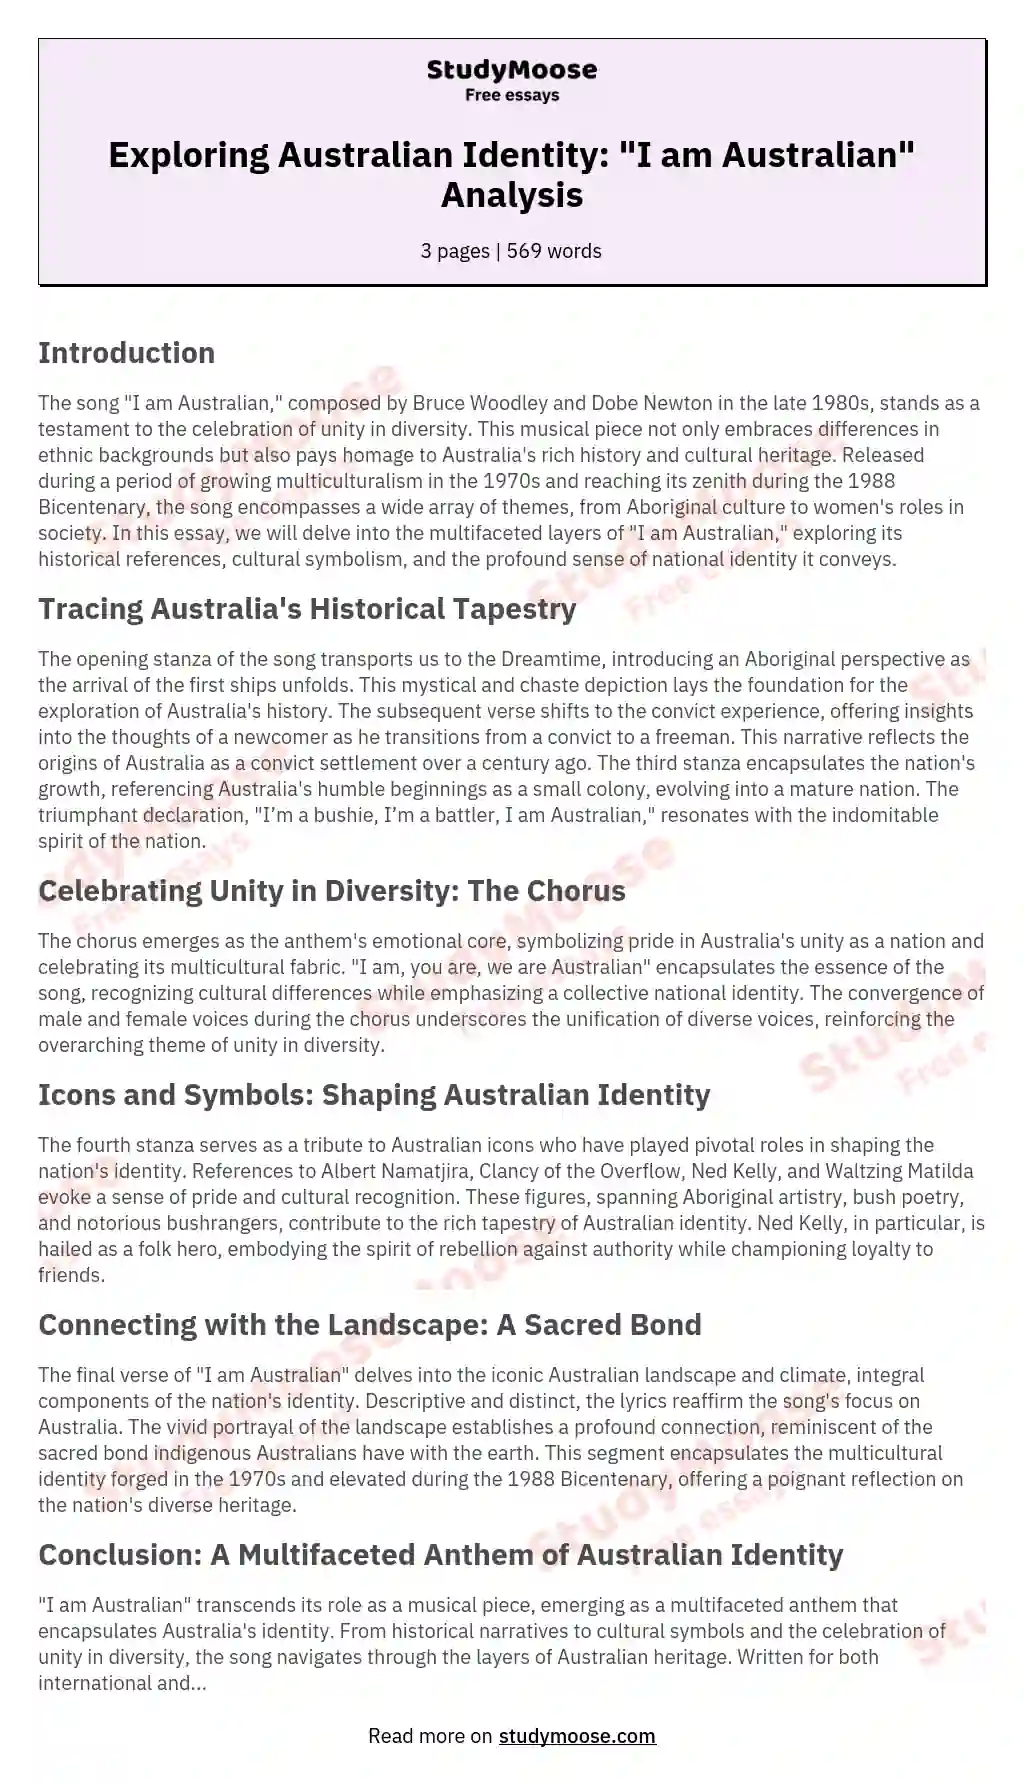 Exploring Australian Identity: "I am Australian" Analysis essay